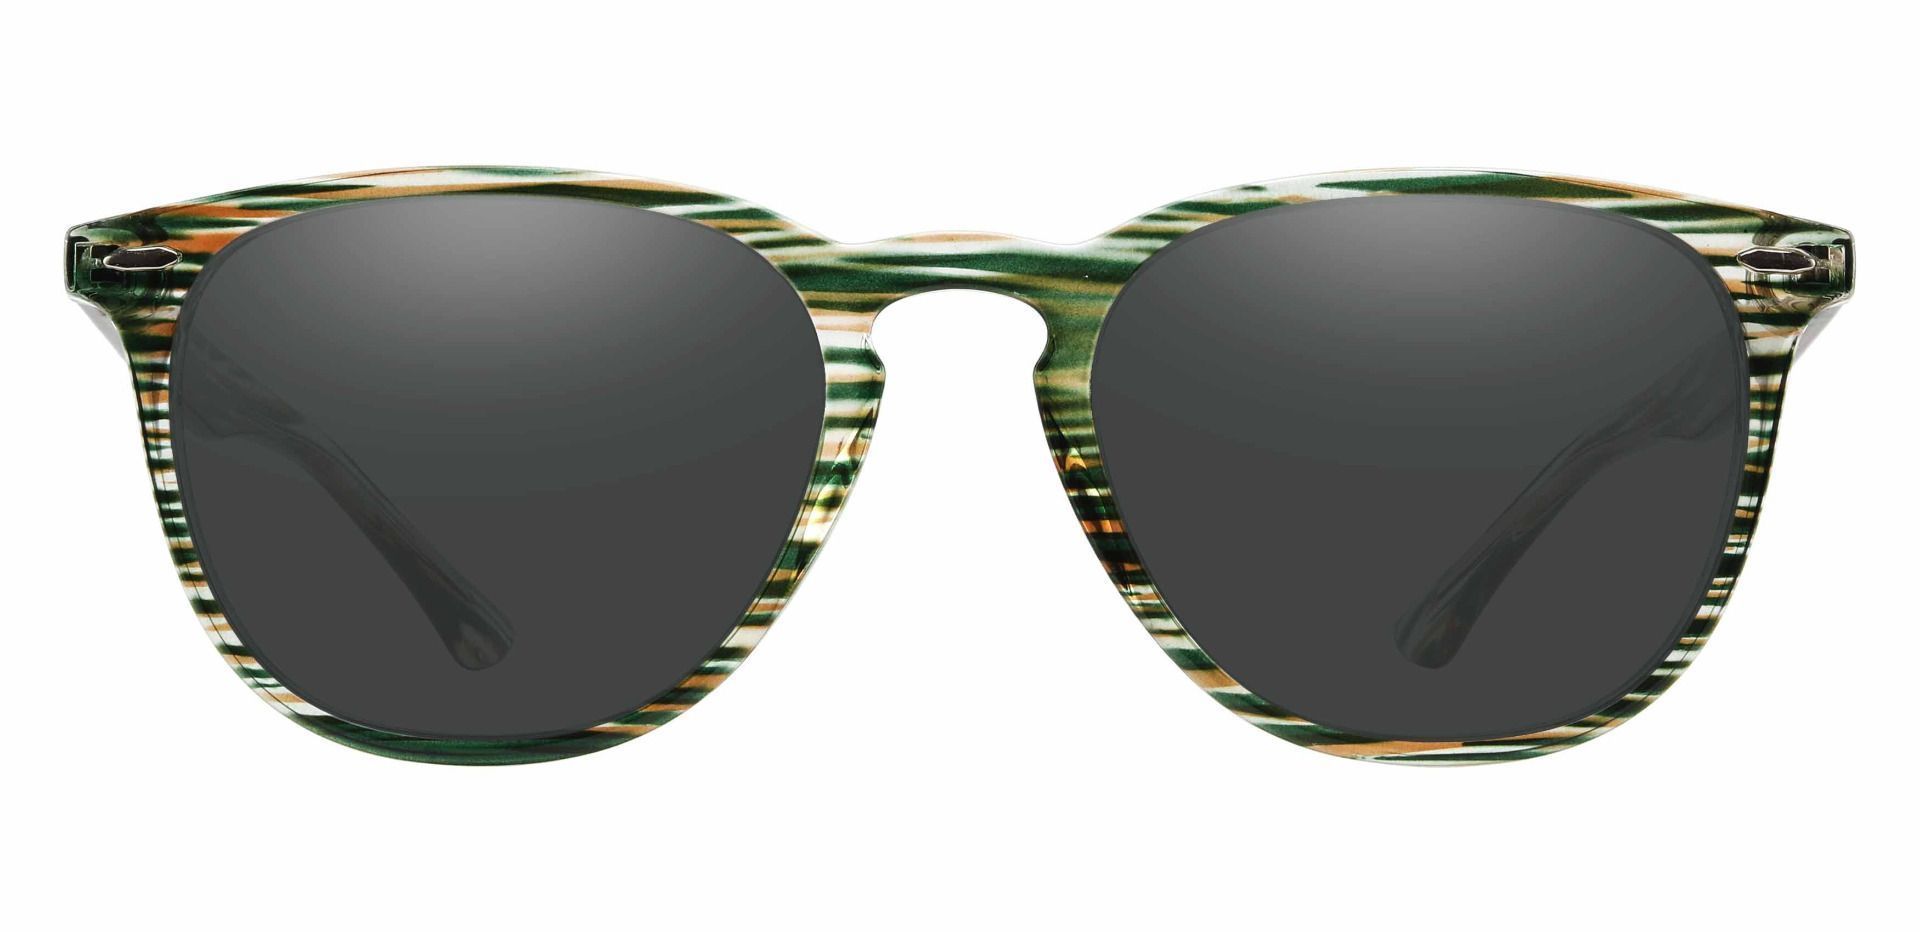 Sycamore Oval Progressive Sunglasses - Green Frame With Gray Lenses